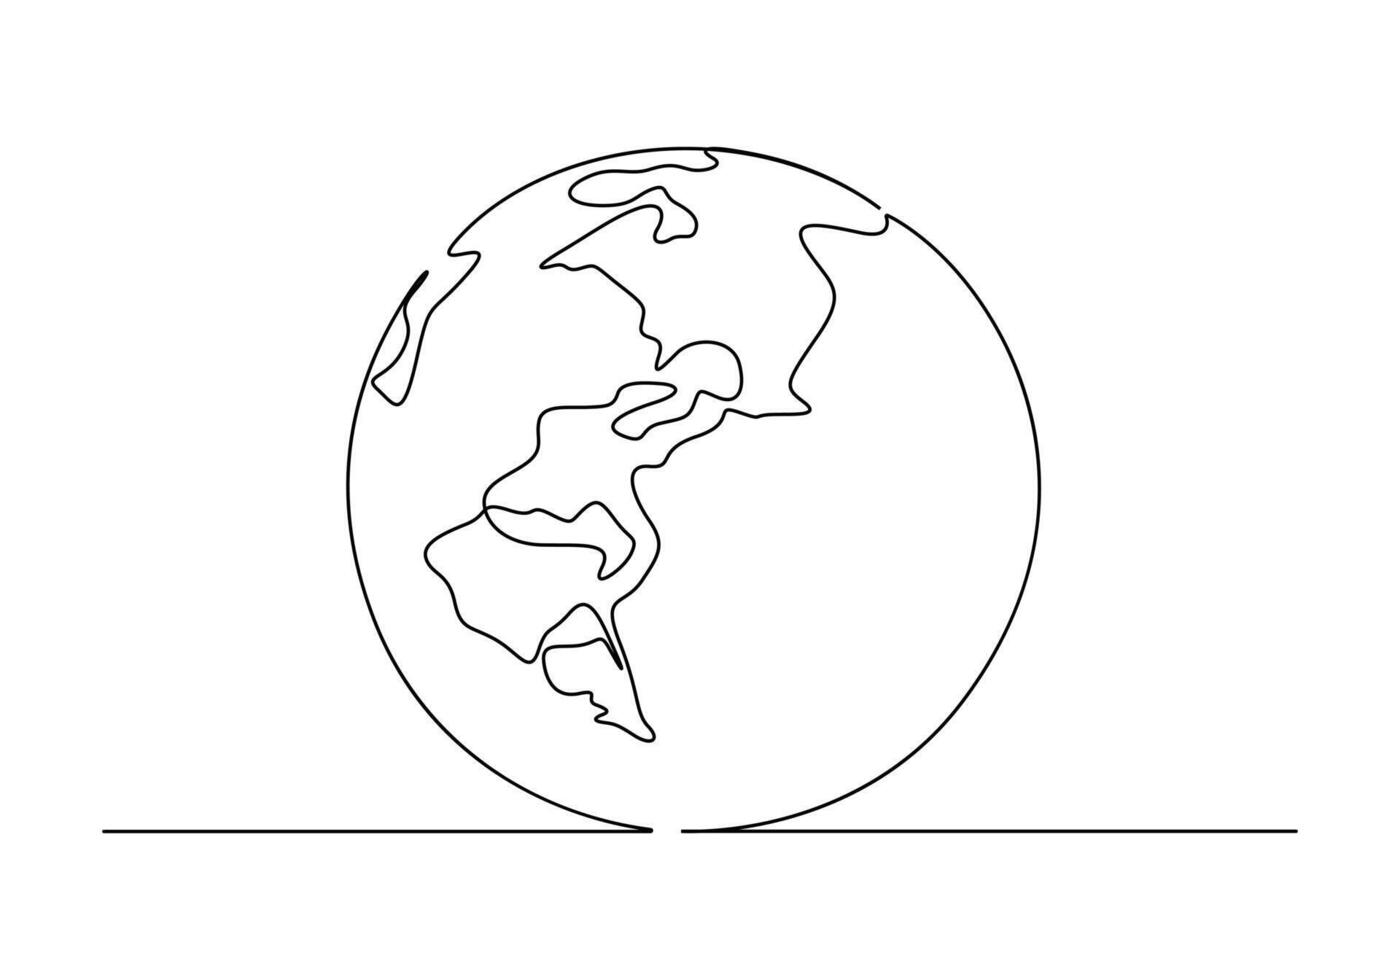 monde carte continu un ligne dessin de Terre globe vecteur illustration